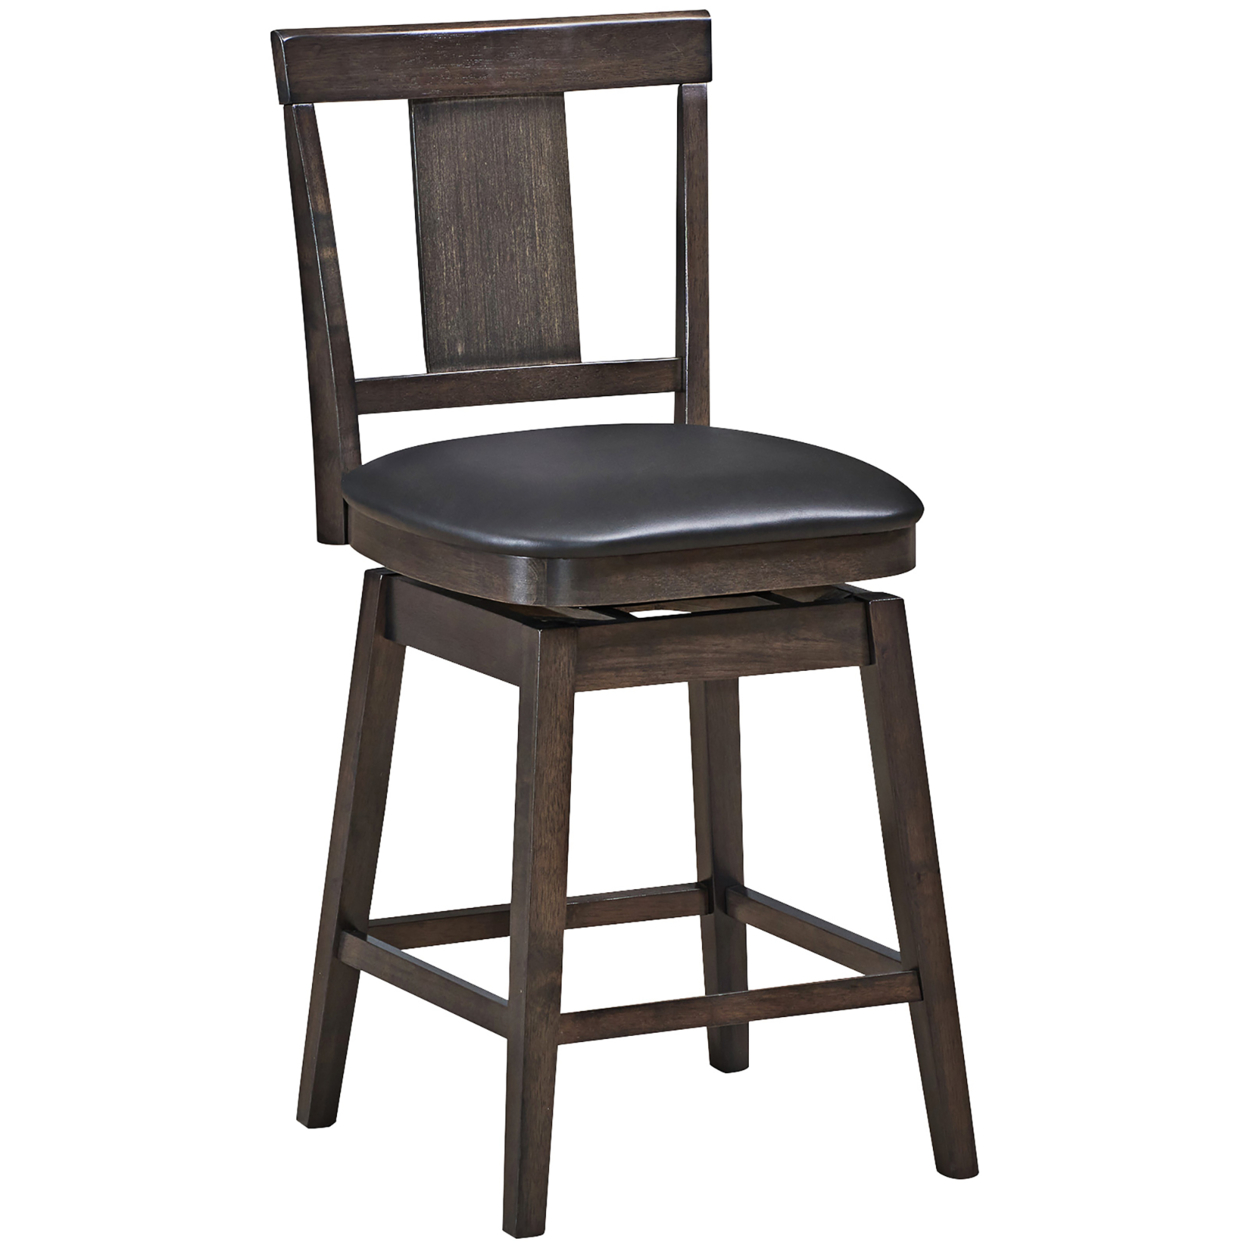 1PC\\2PCS\\3PCS\\4PCS Swivel Bar Stool 24 inch Upholstered Counter Height Bar Chair w/Rubber Wood Legs - 2PCS